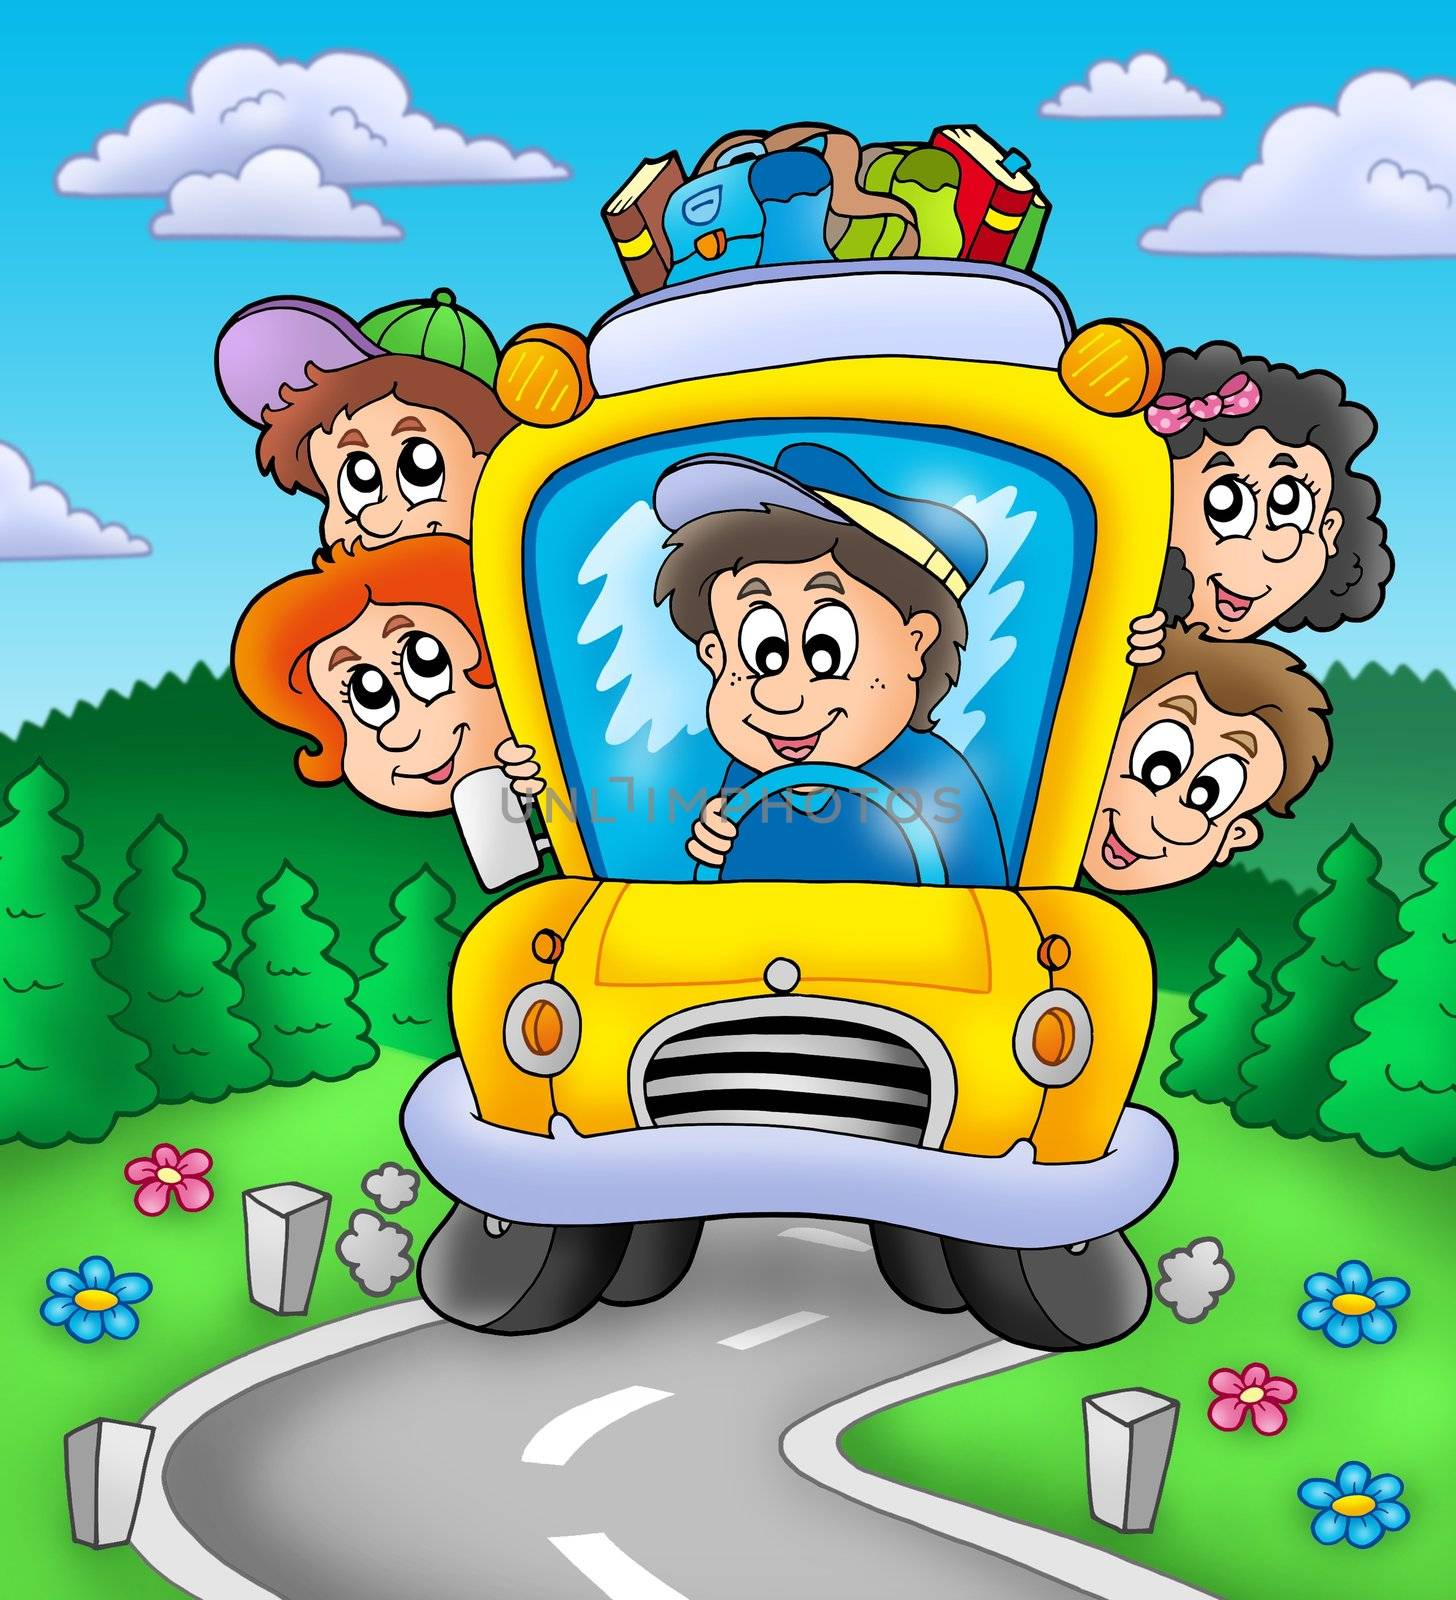 School bus on road - color illustration.